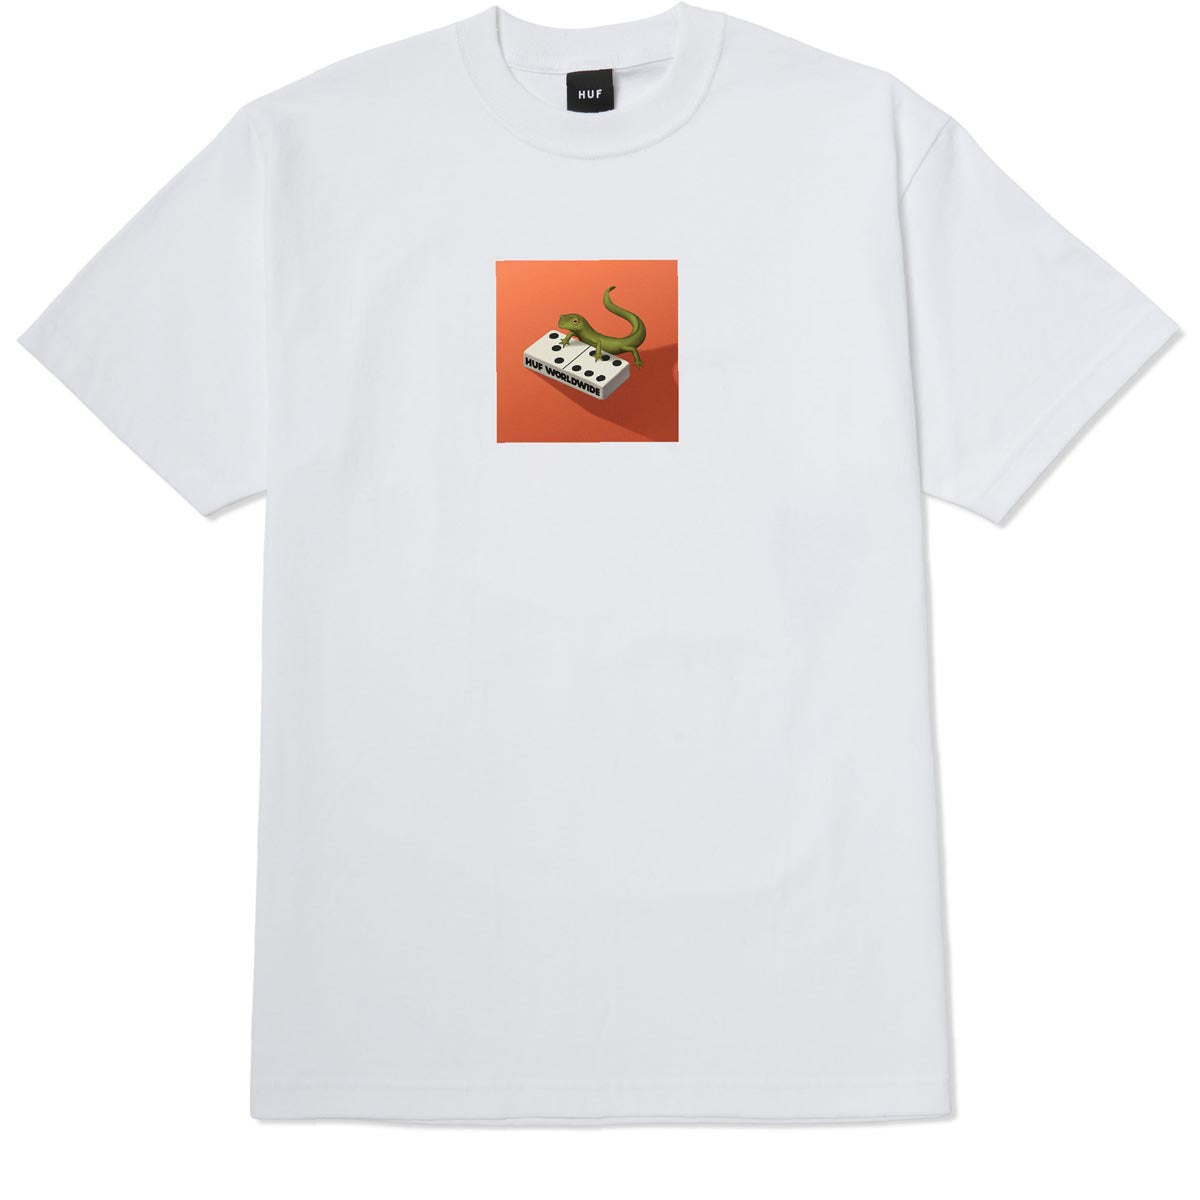 HUF Gecko T-Shirt - White image 1